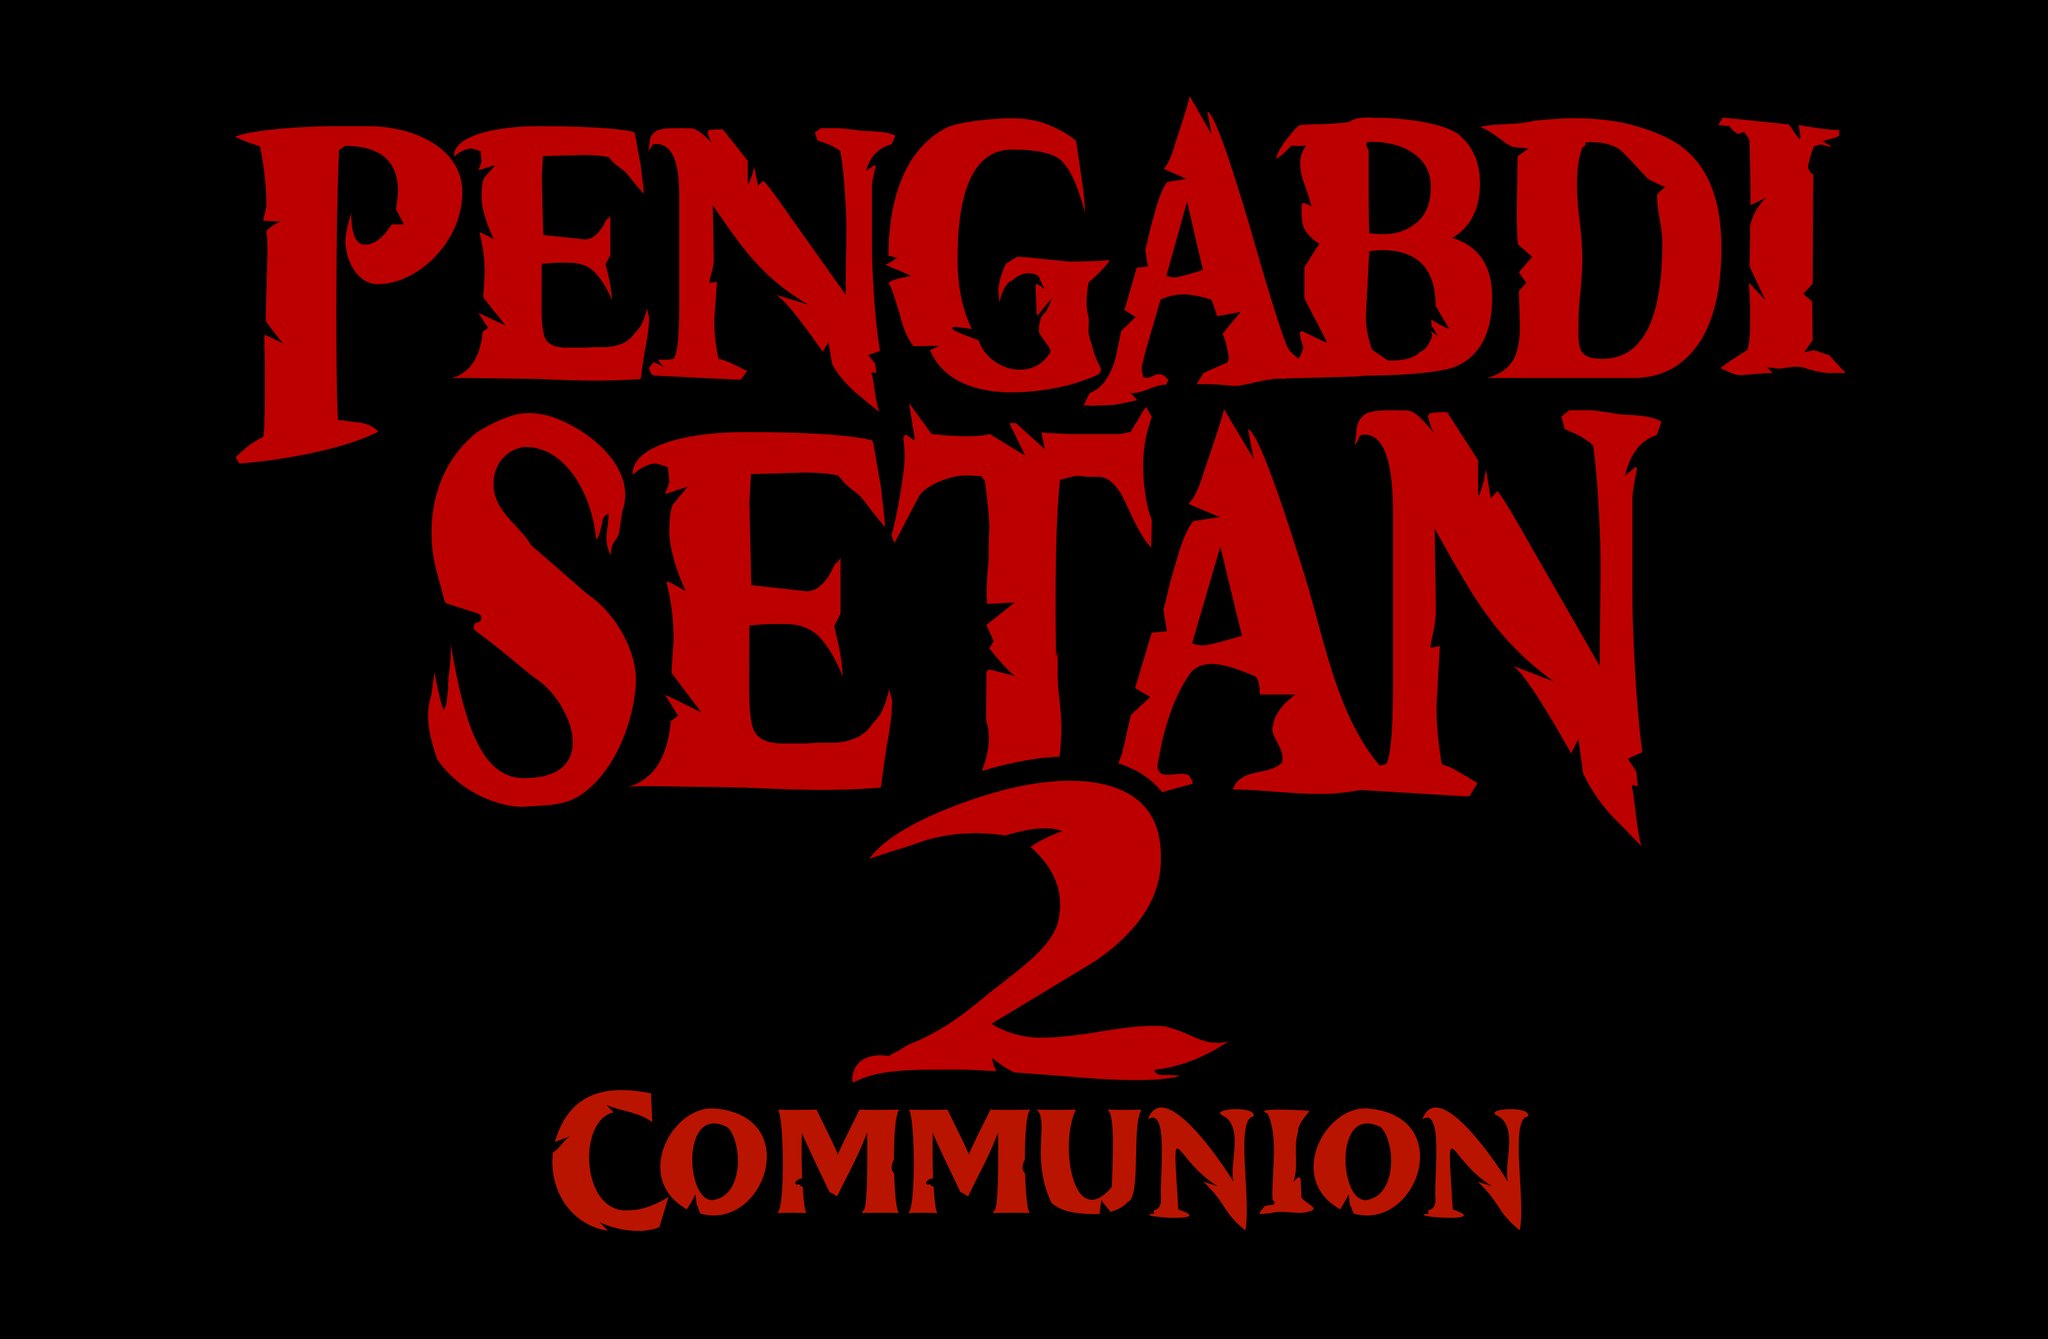 Satan's Slaves: Communion